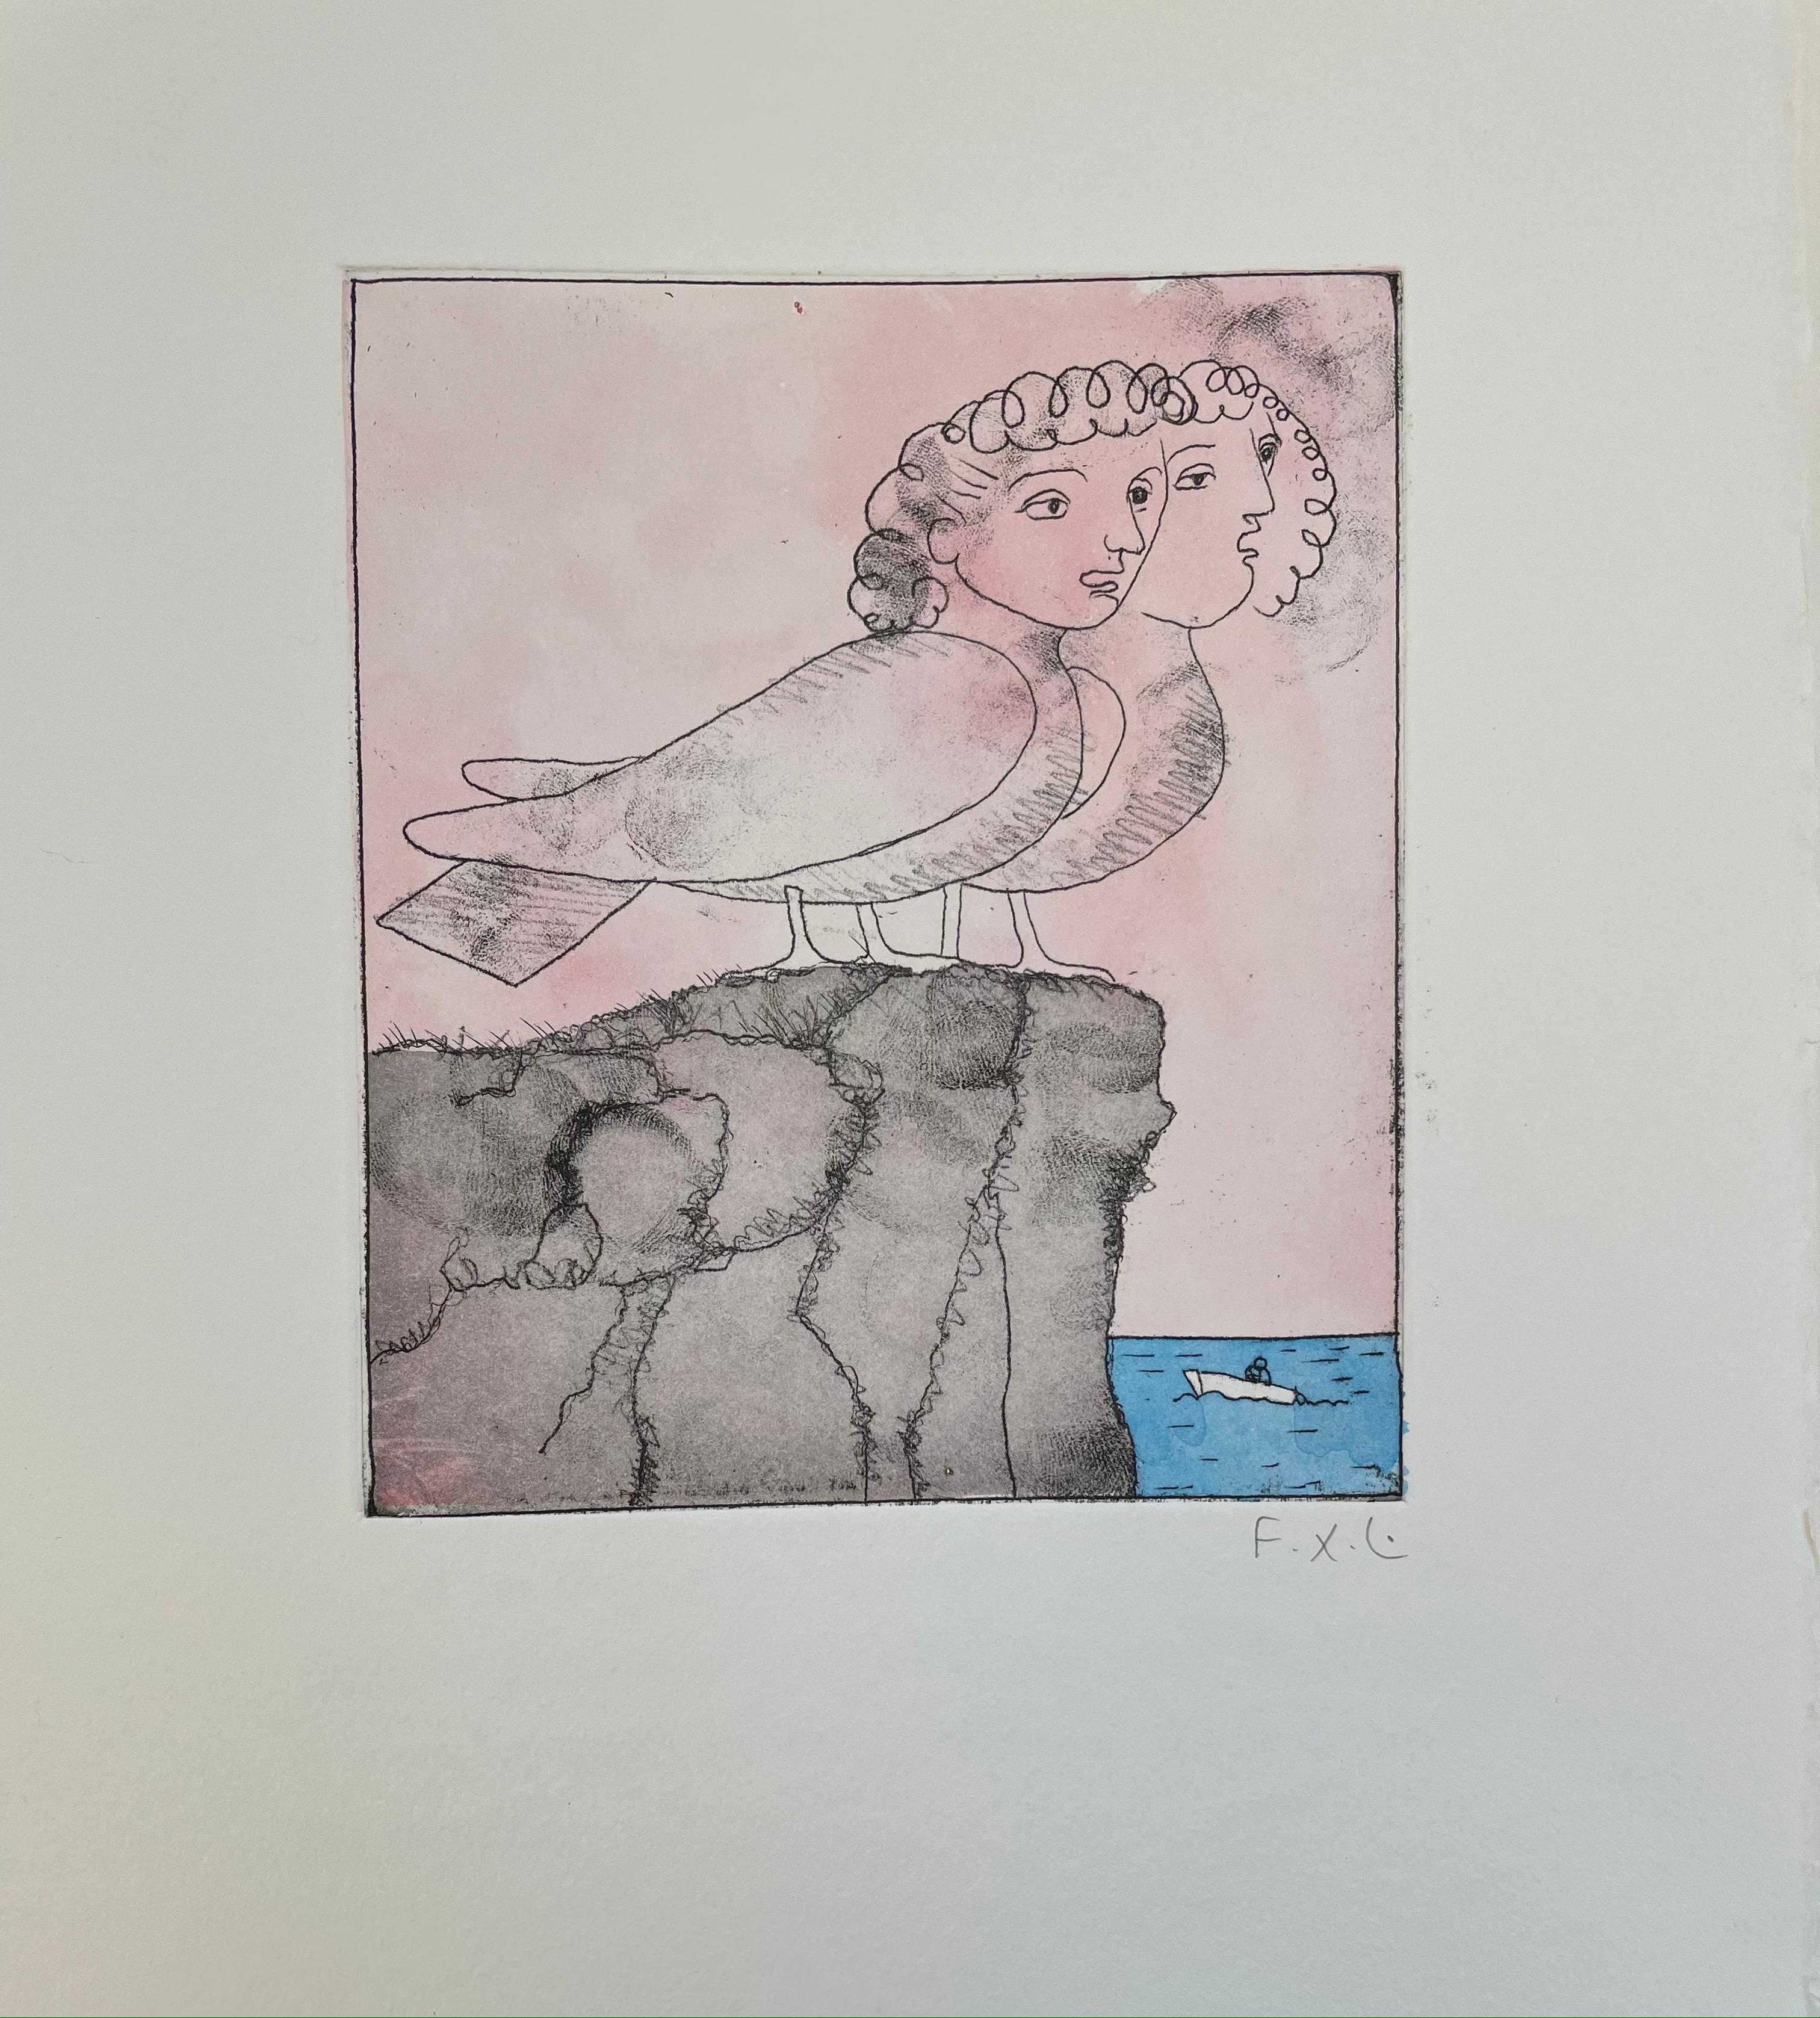  François-Xavier Lalanne (1927-2008) Sirens (women-headed birds in greek mytholo - Print by Francois-Xavier Lalanne